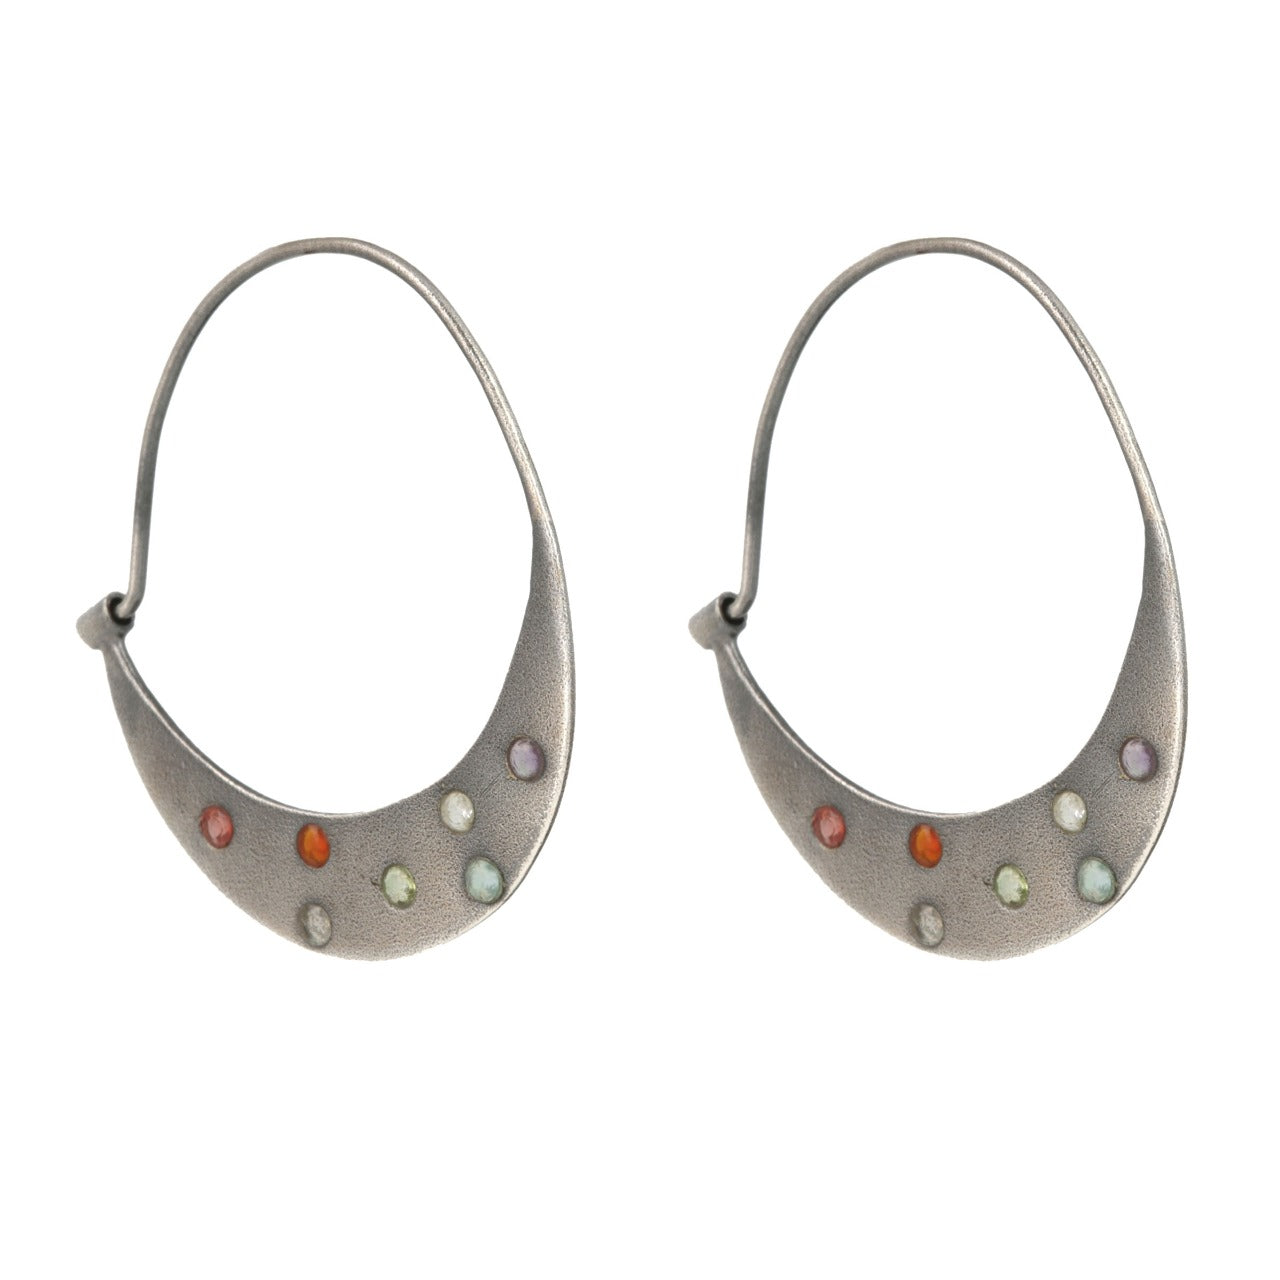 Omi handcrafted earrings